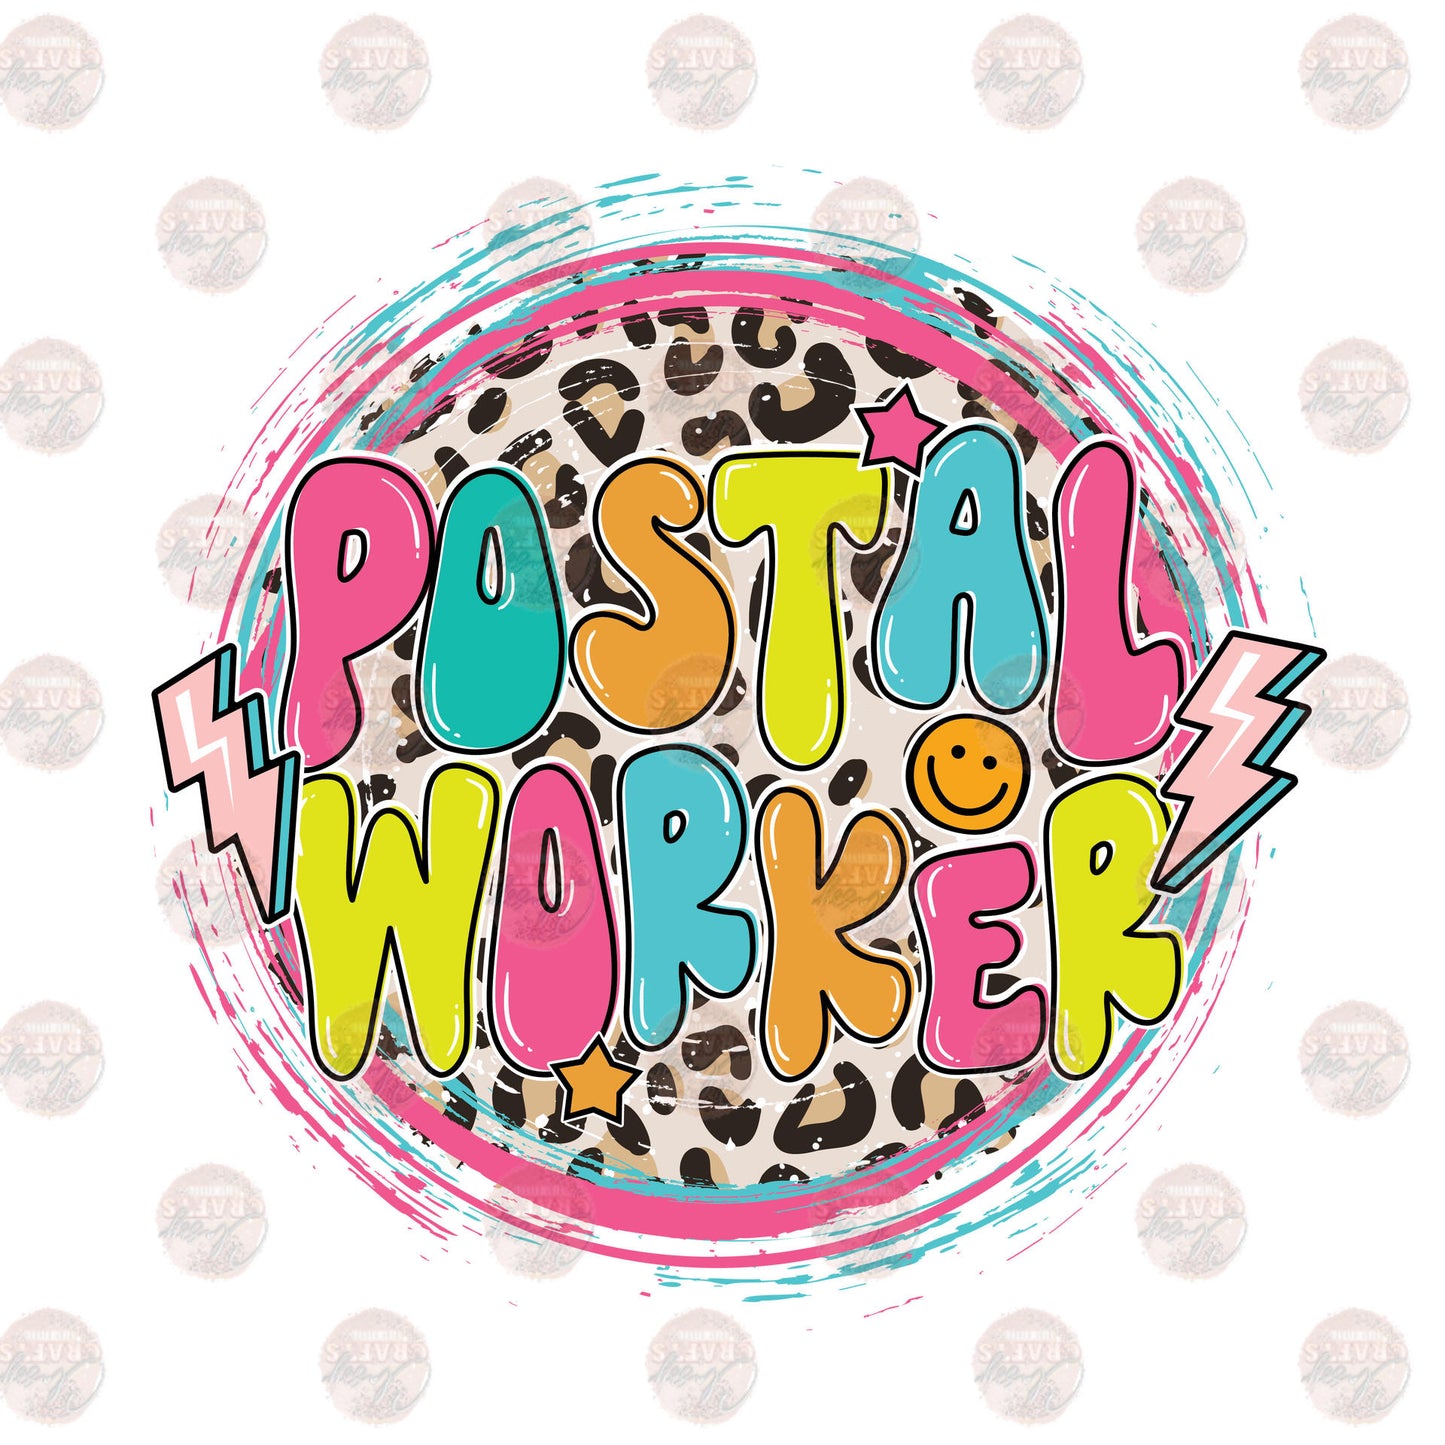 Postal Worker Transfer